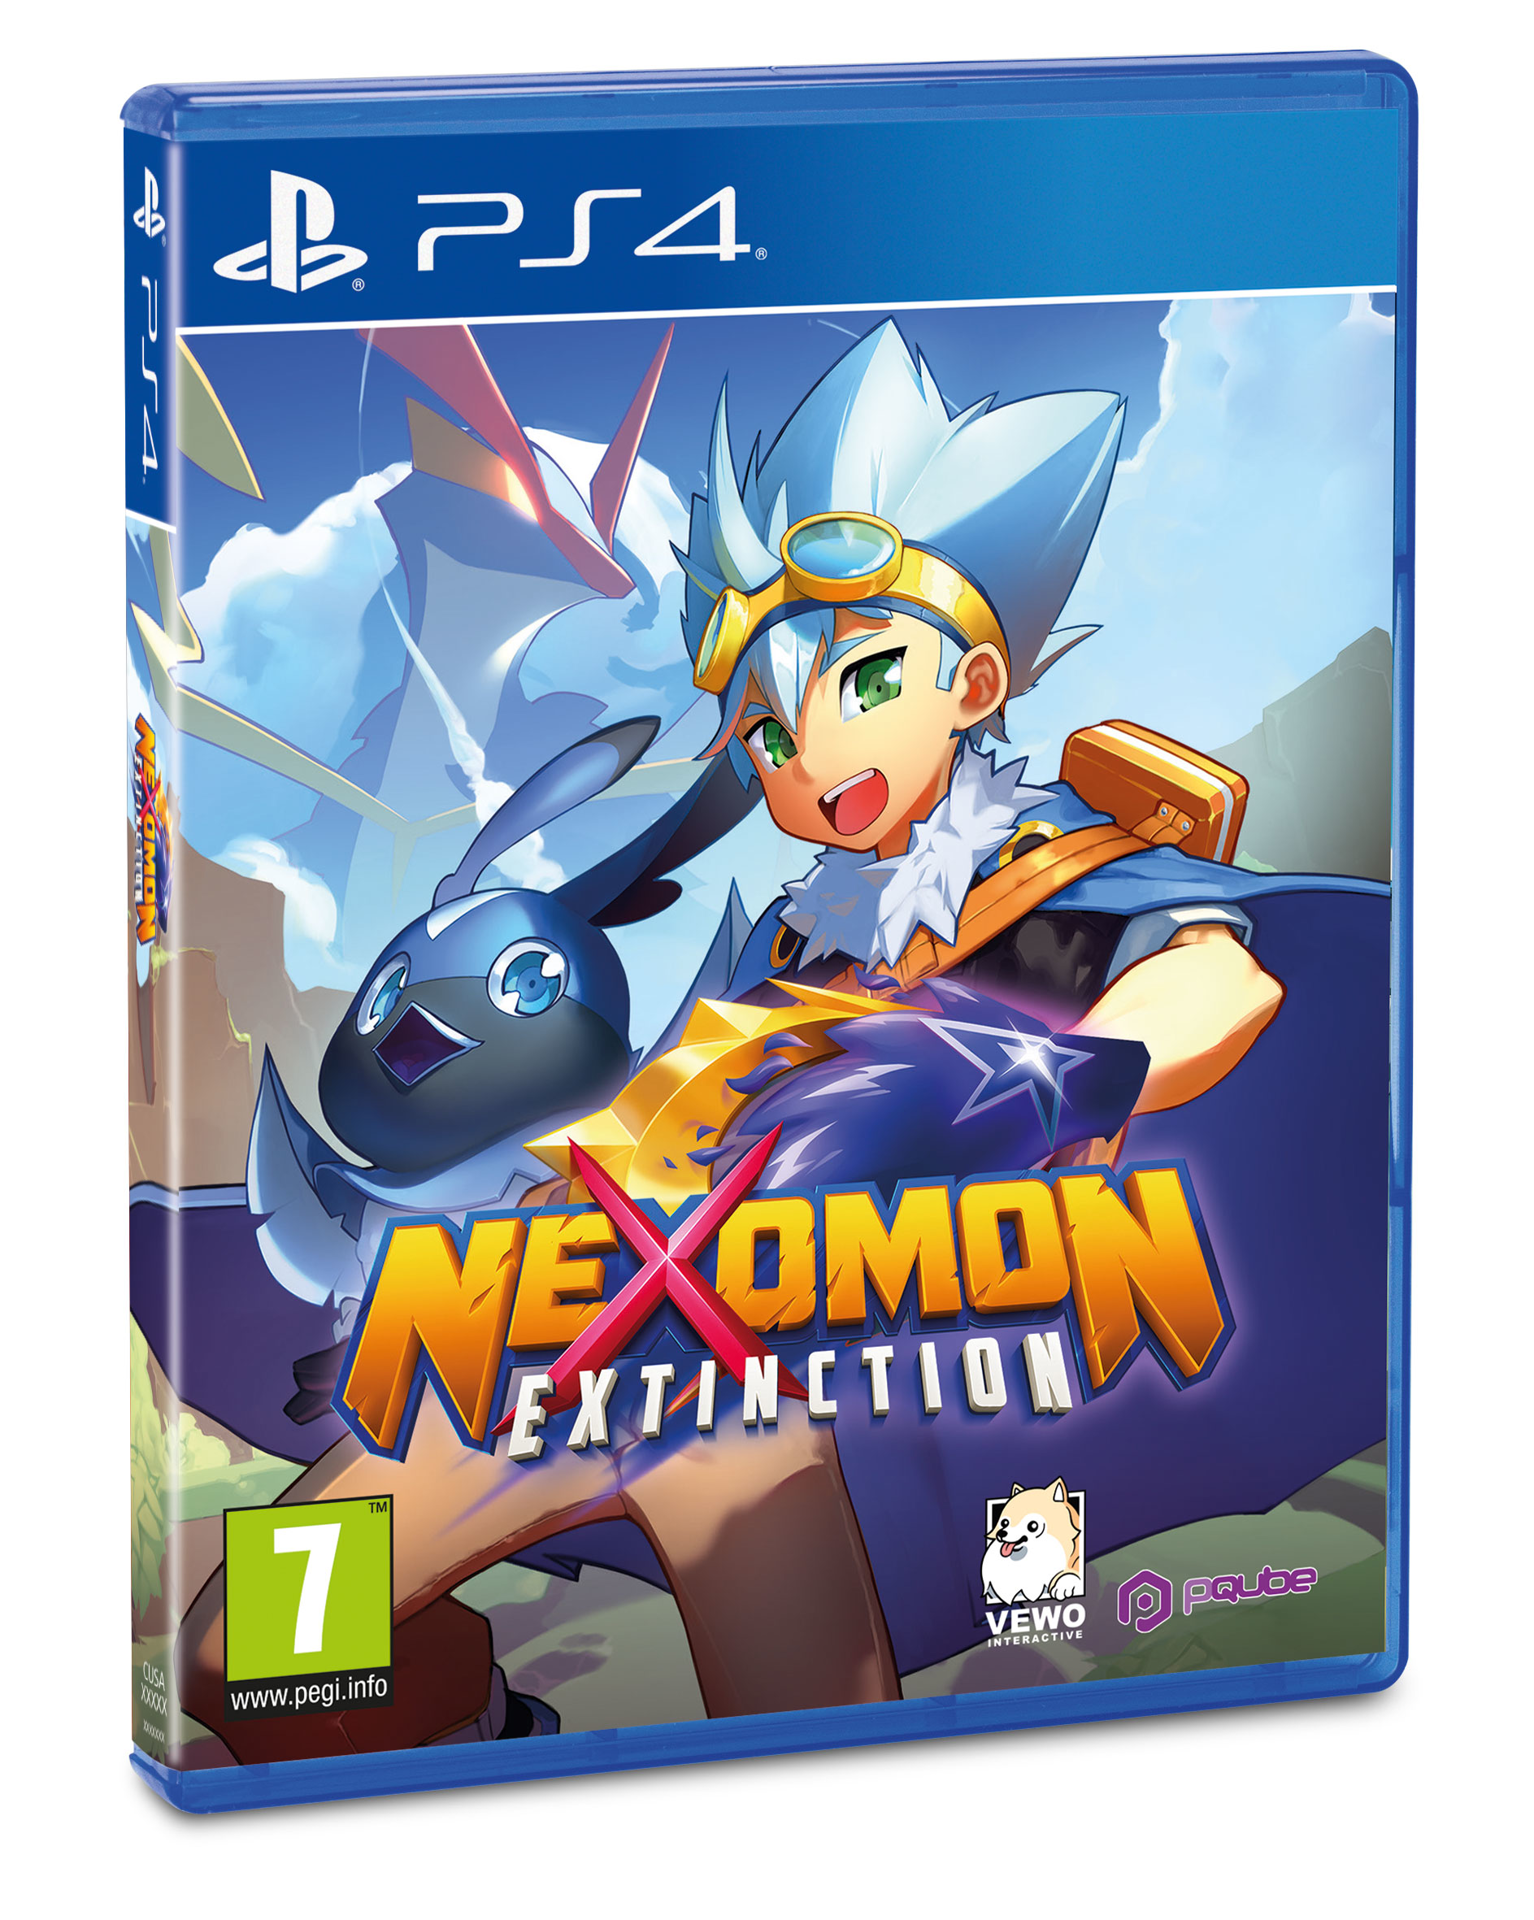 § Nexomon: Extinction